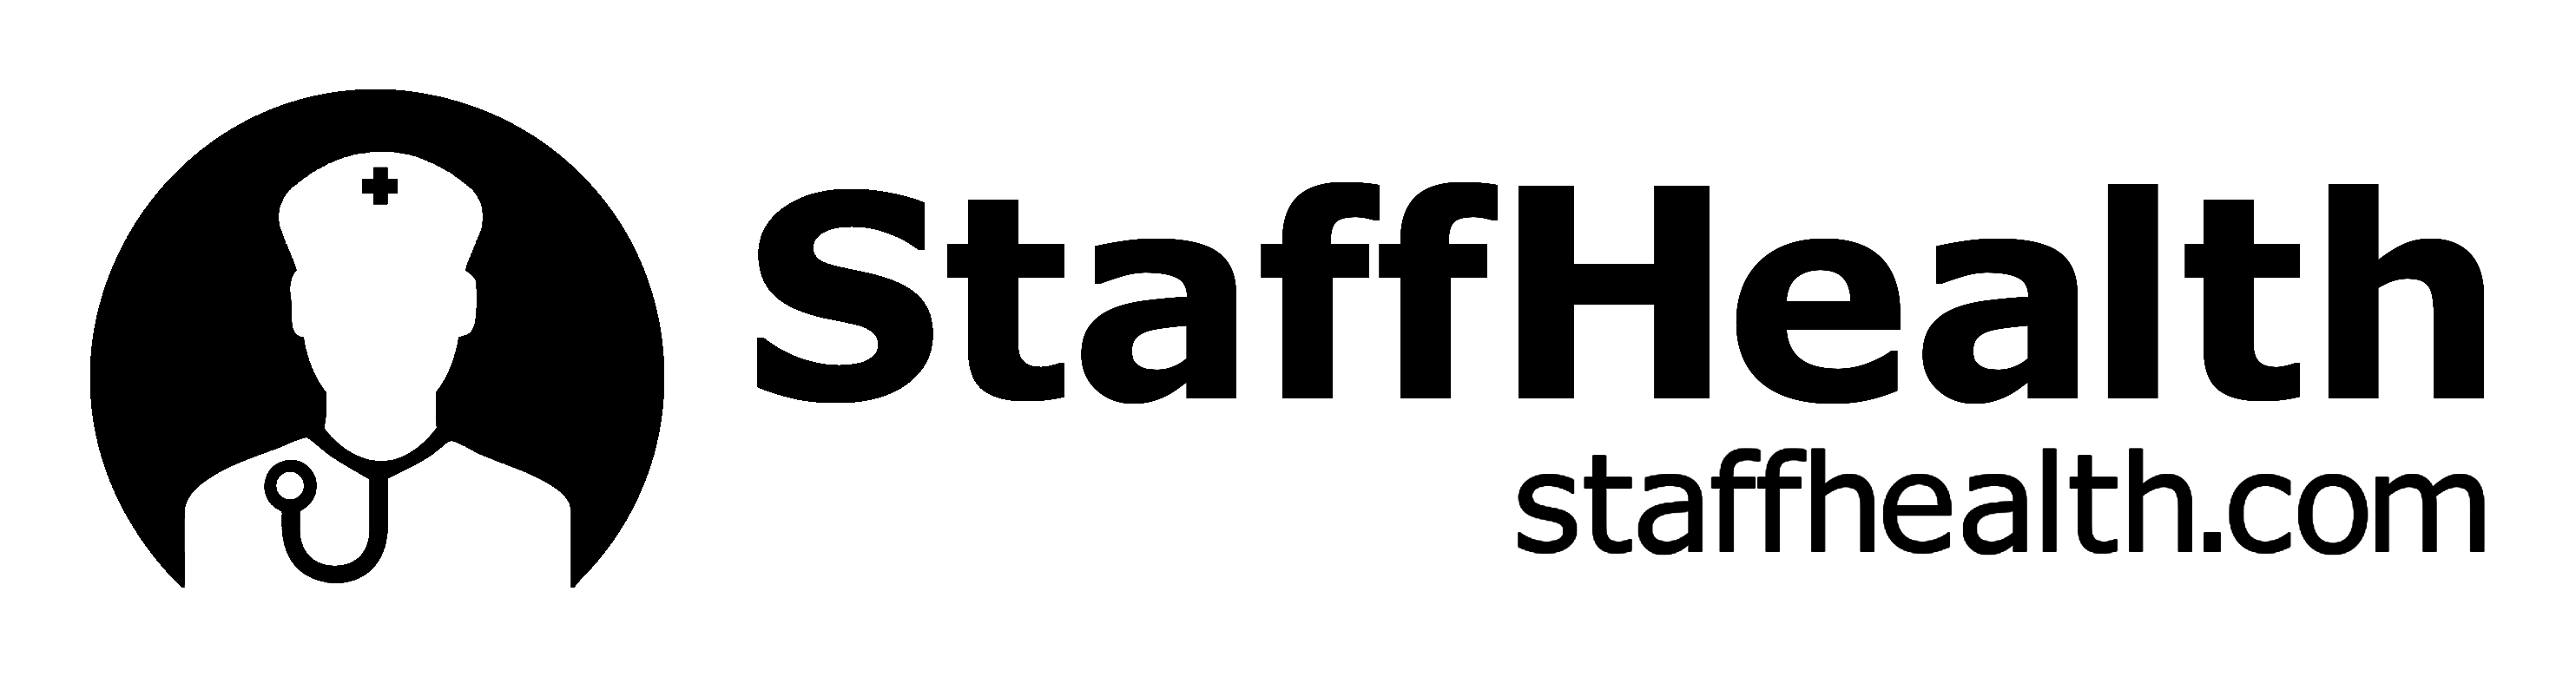 StaffHealth-dark logo